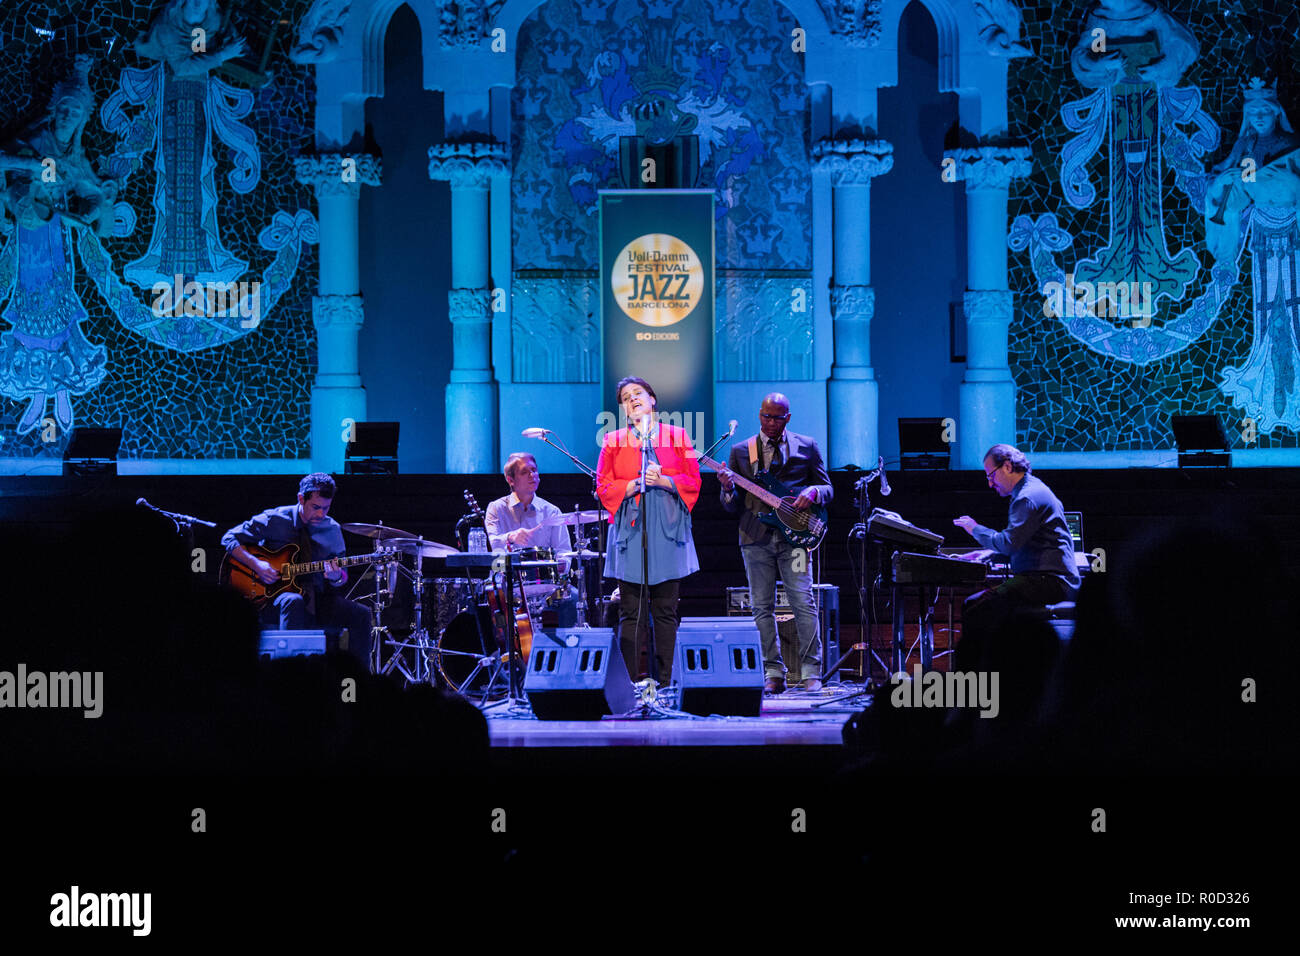 Barcelona, Spanien. 03. November 2018. Konzert von Madeleine Peyroux im Palau de la Música Catalana. Fotograf: Credit: Aitor Rodero Aznarez/Alamy leben Nachrichten Stockfoto